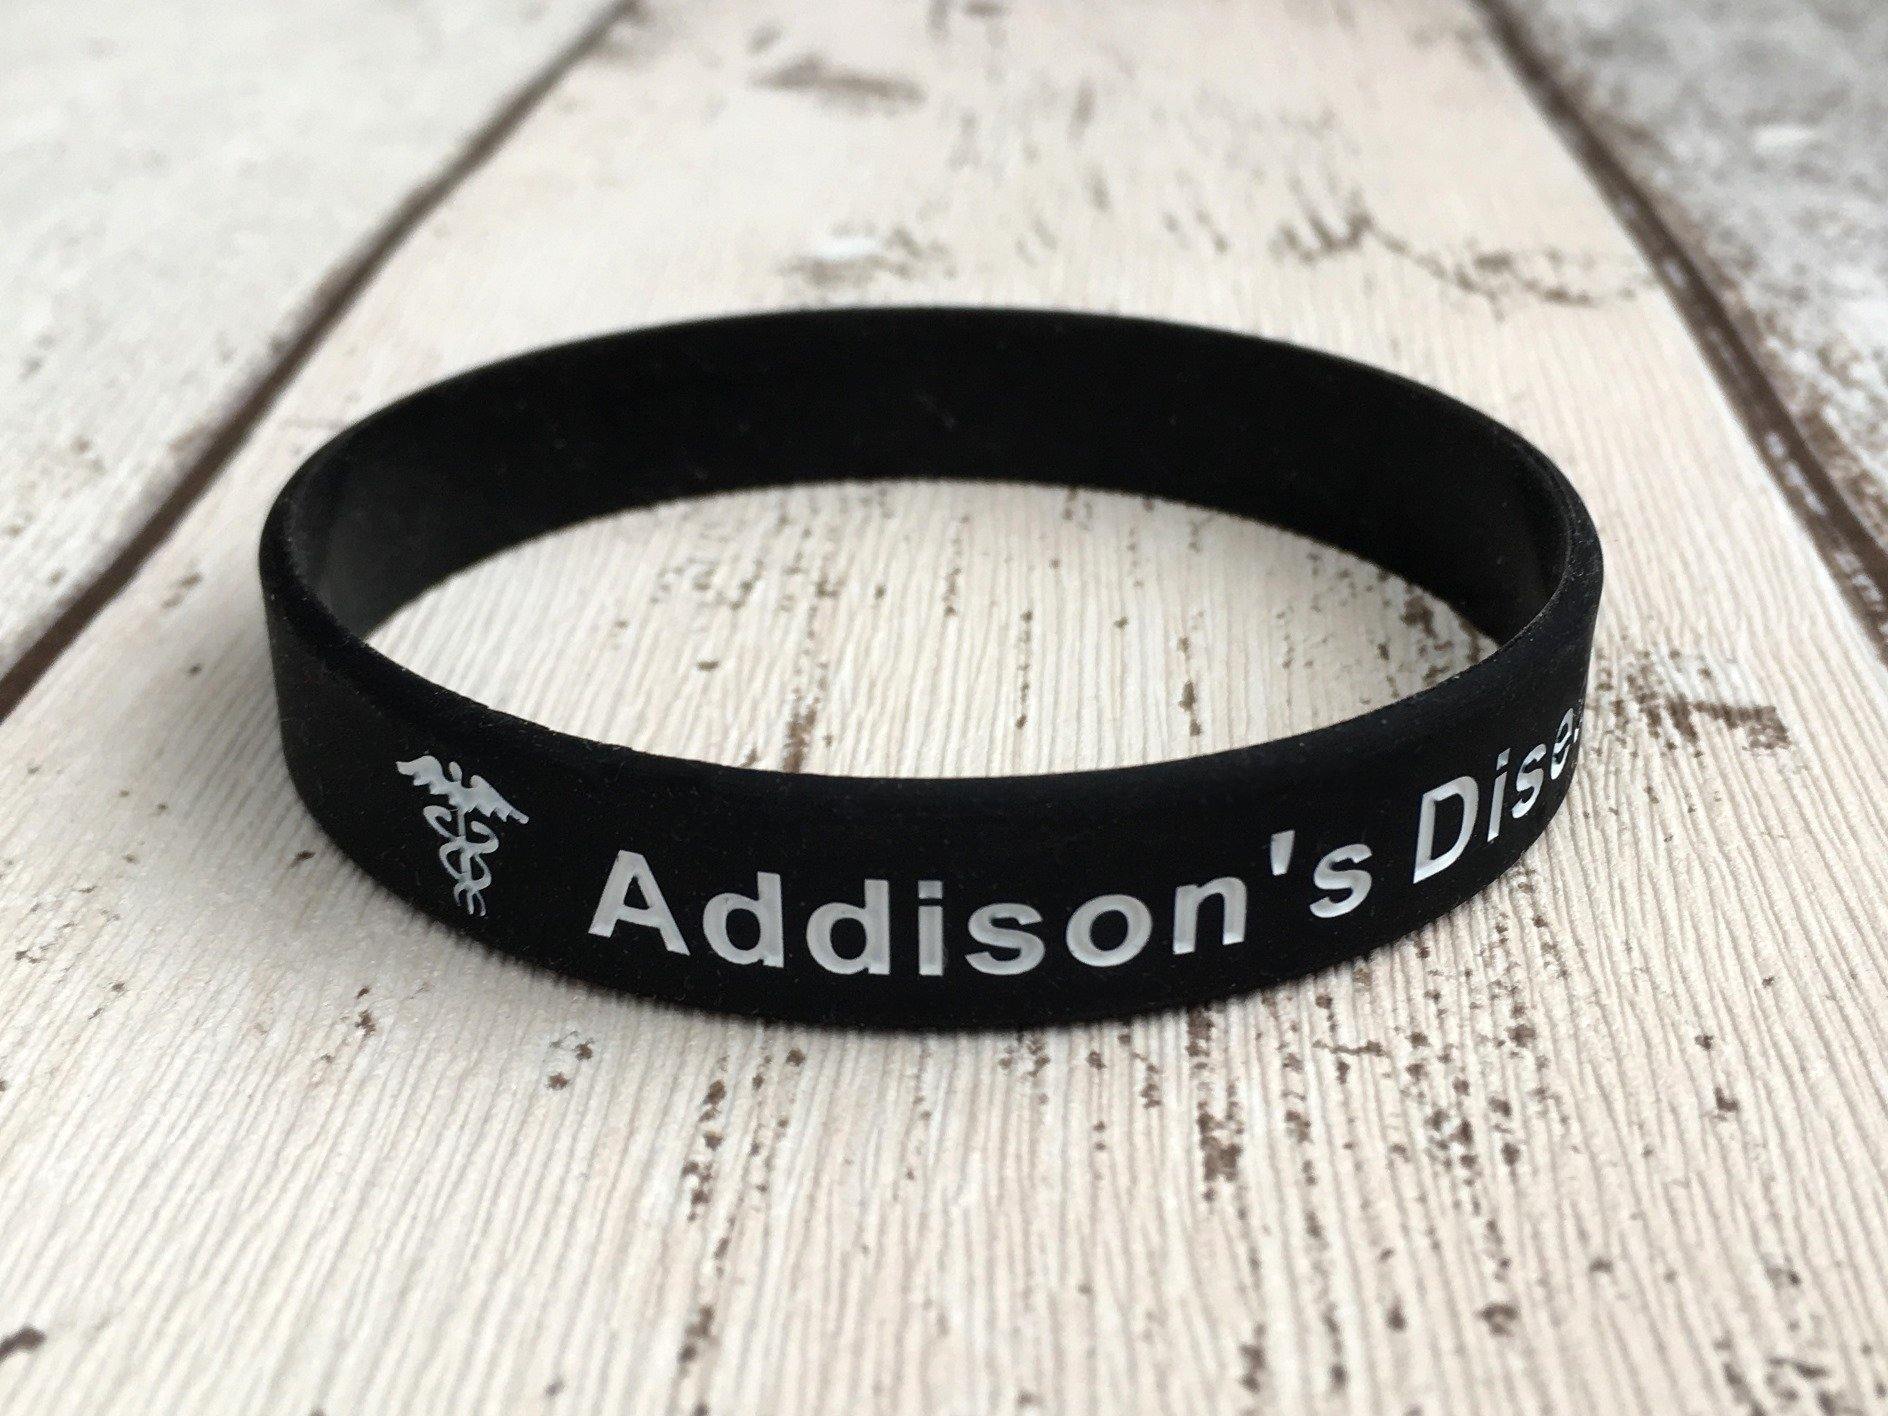 Medical alert jewellery for Addison's Disease